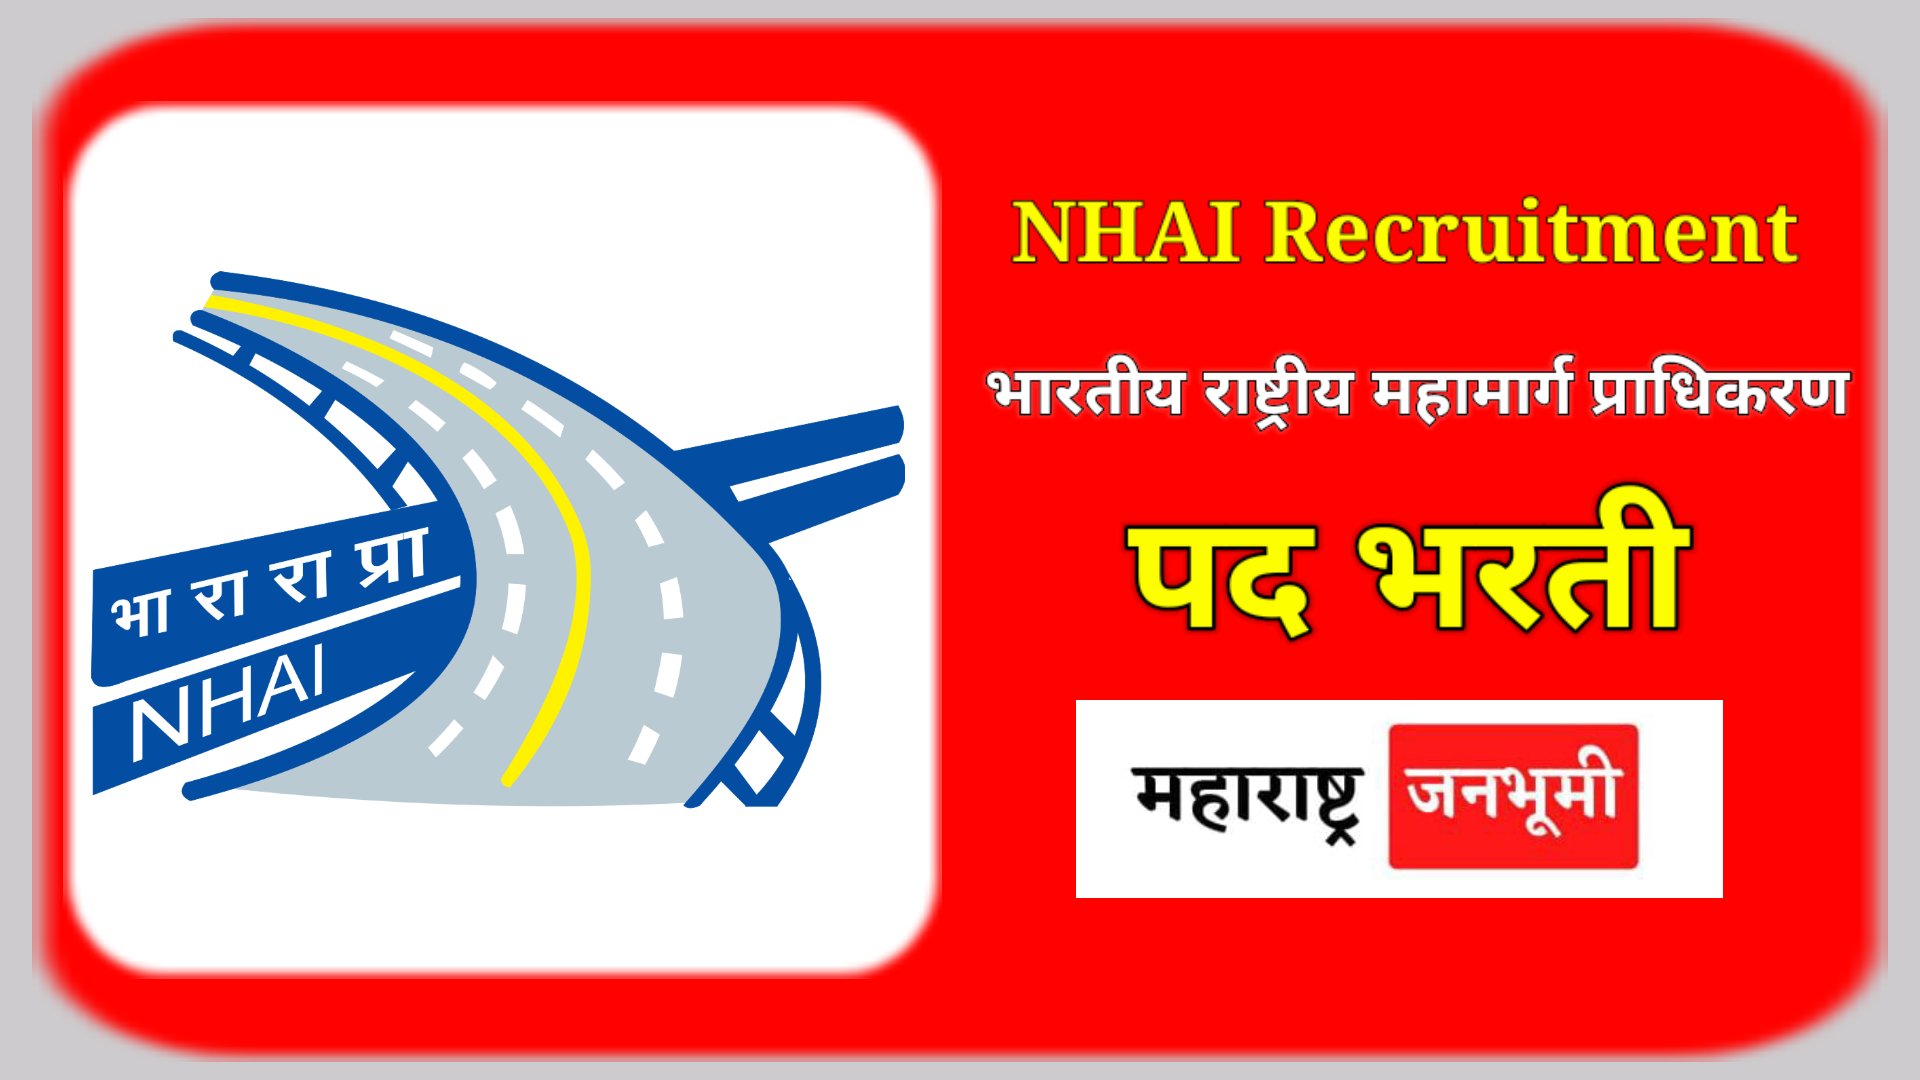 NHAI Recruitment of 50 Deputy Manager